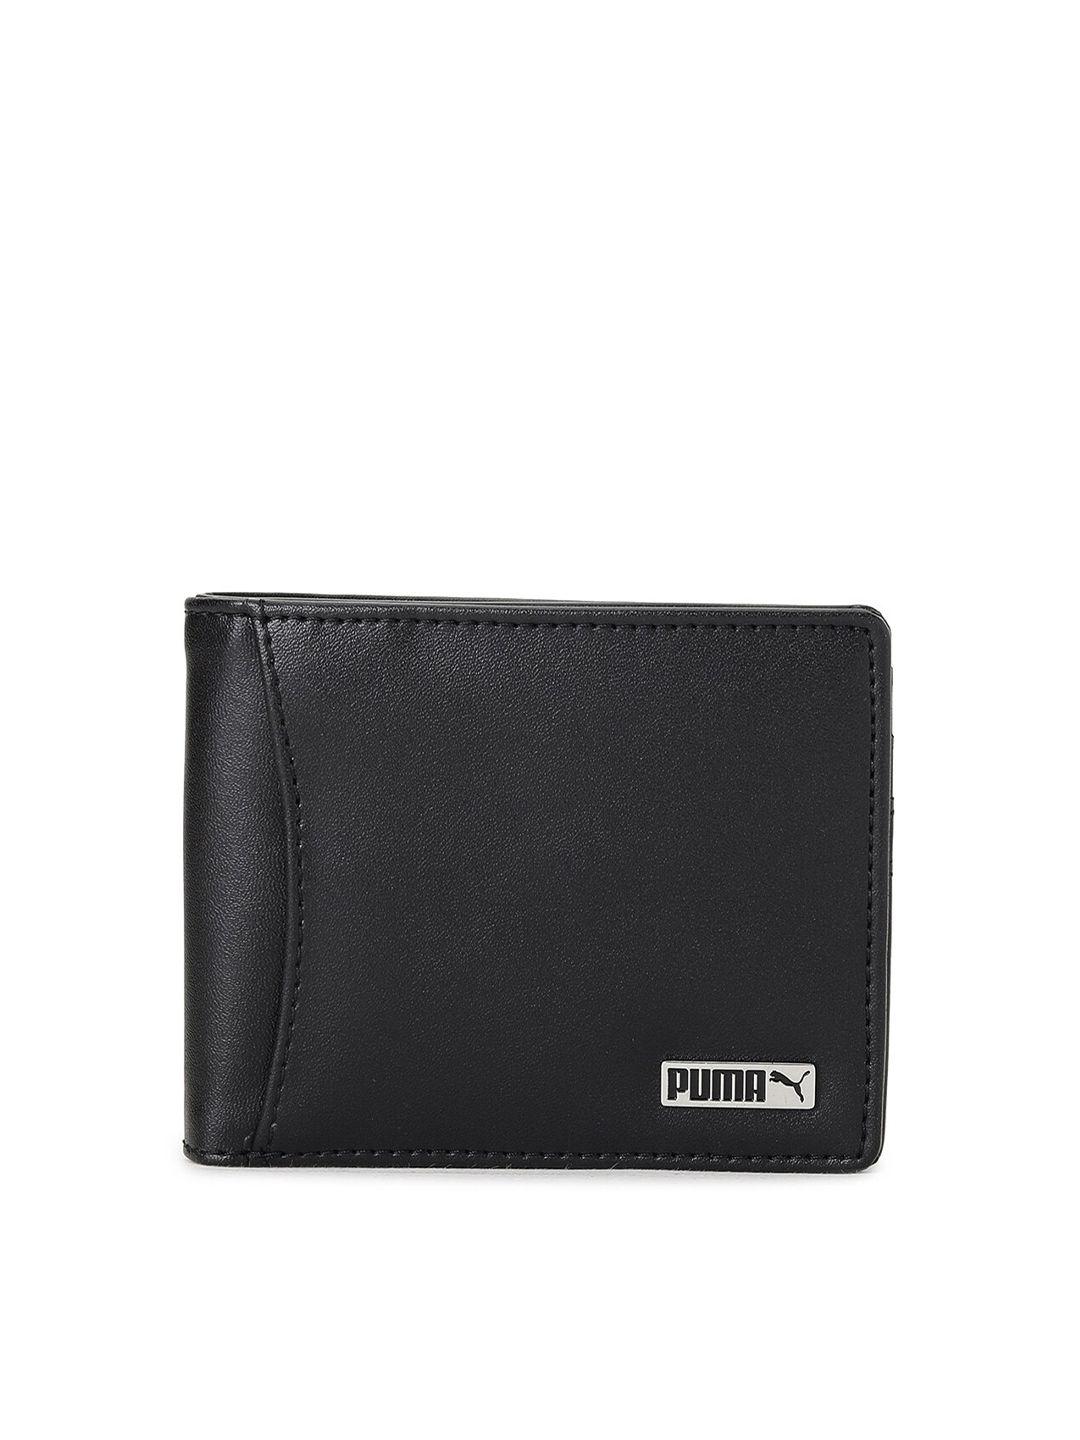 puma-men-black-two-fold-core-wallet